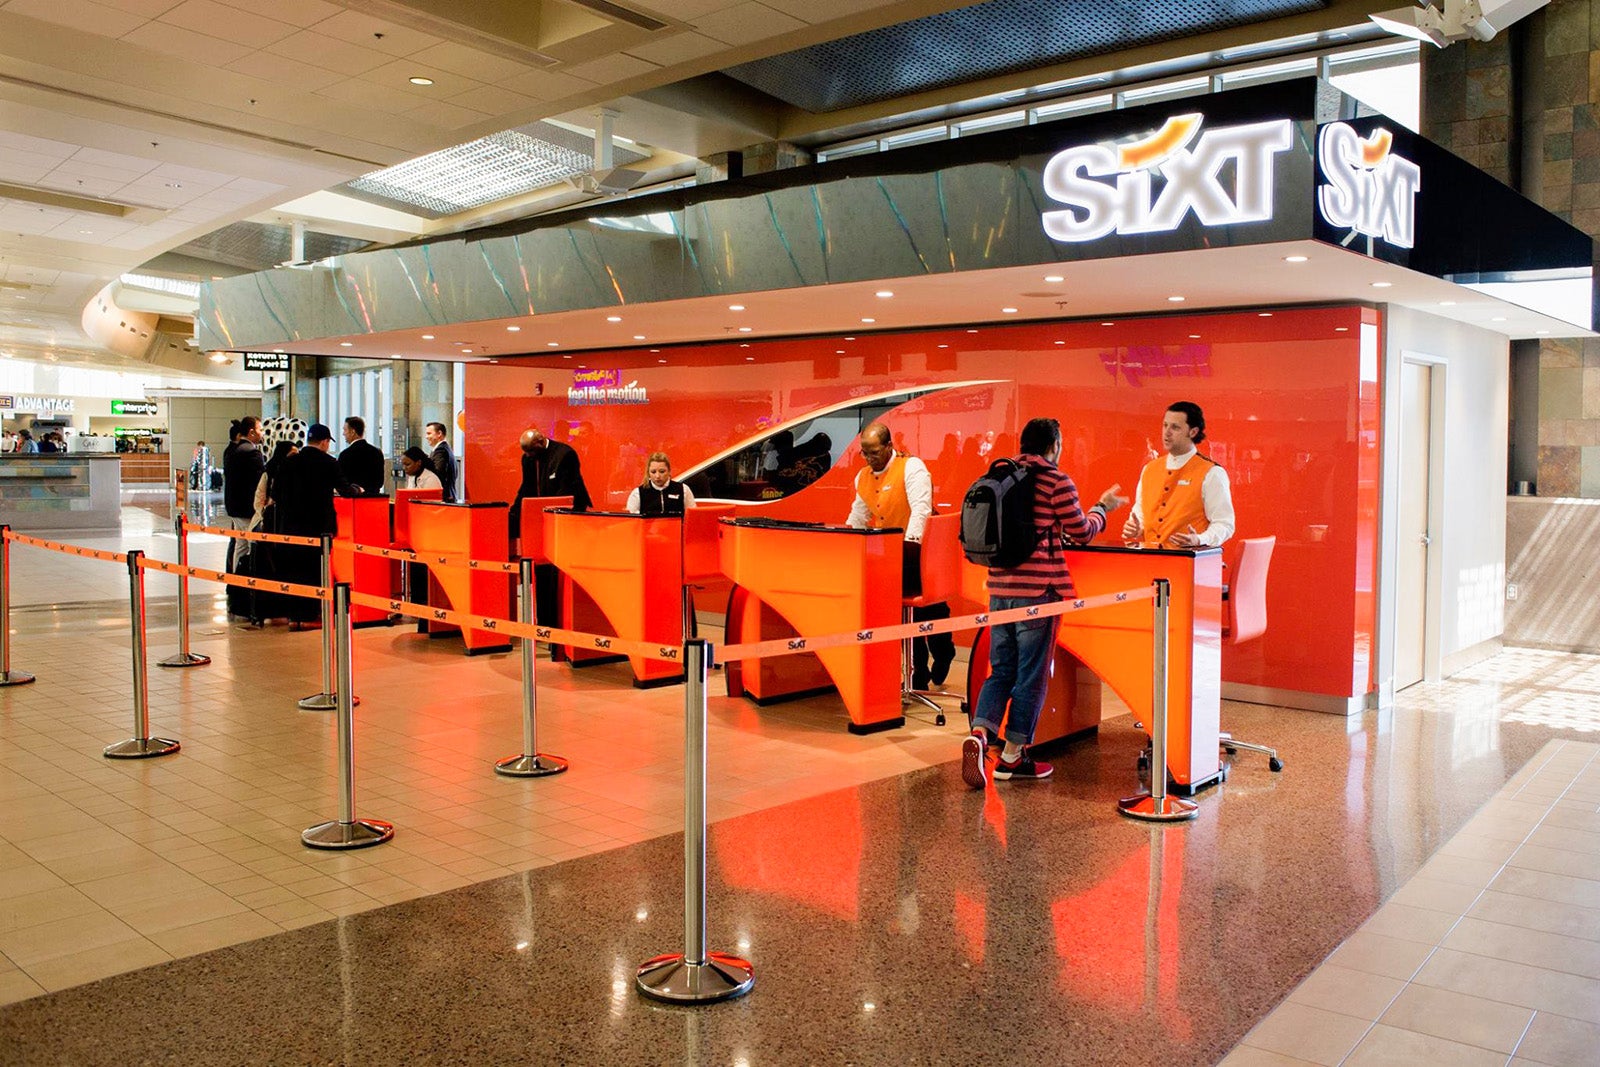 Sixt Facebook Car rental counter at airport